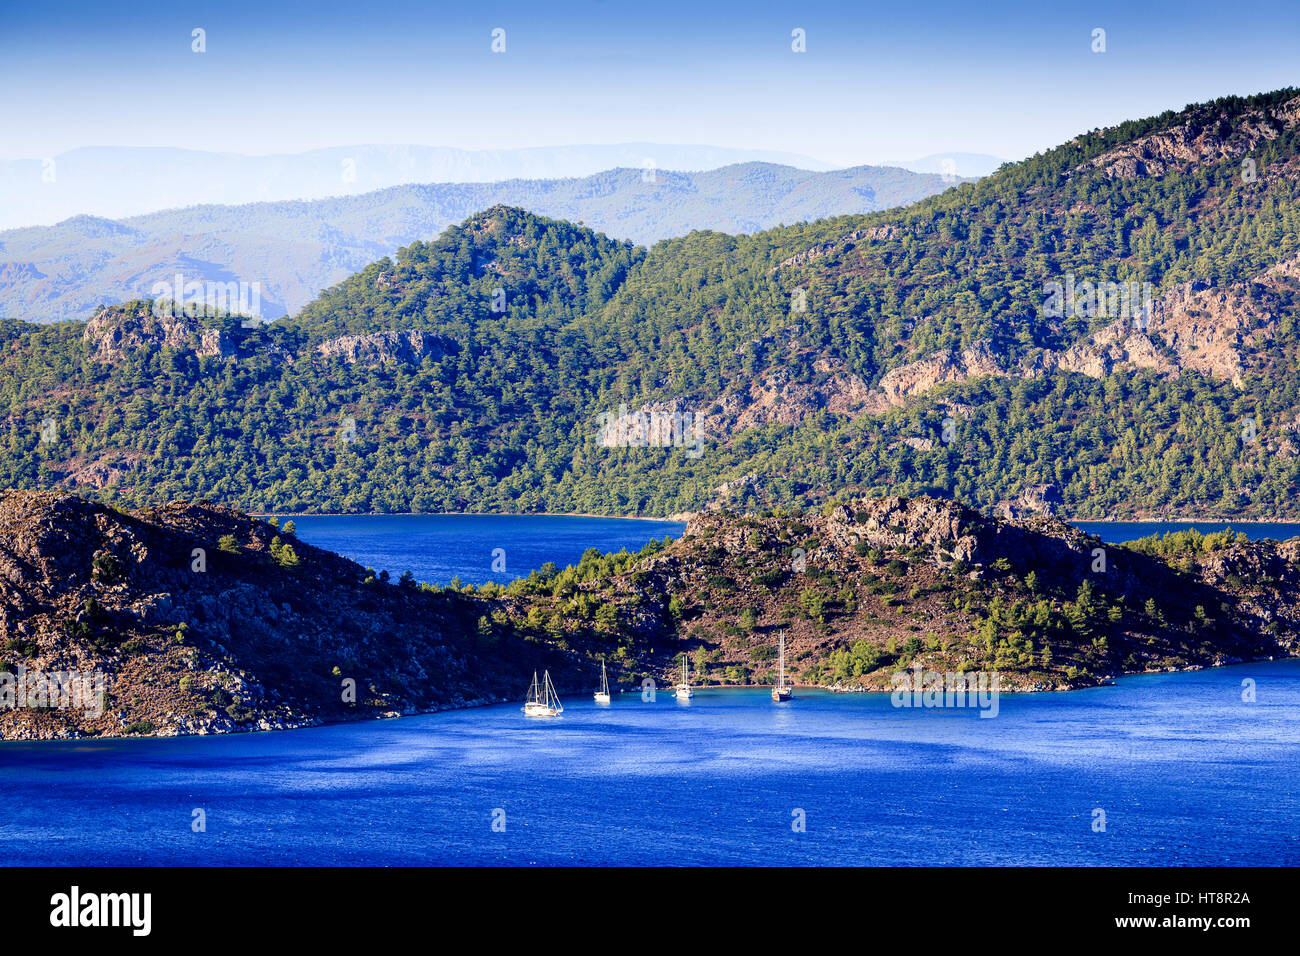 Vista de la bahía de Selimiye, Península Bozburun, Turquía Foto de stock